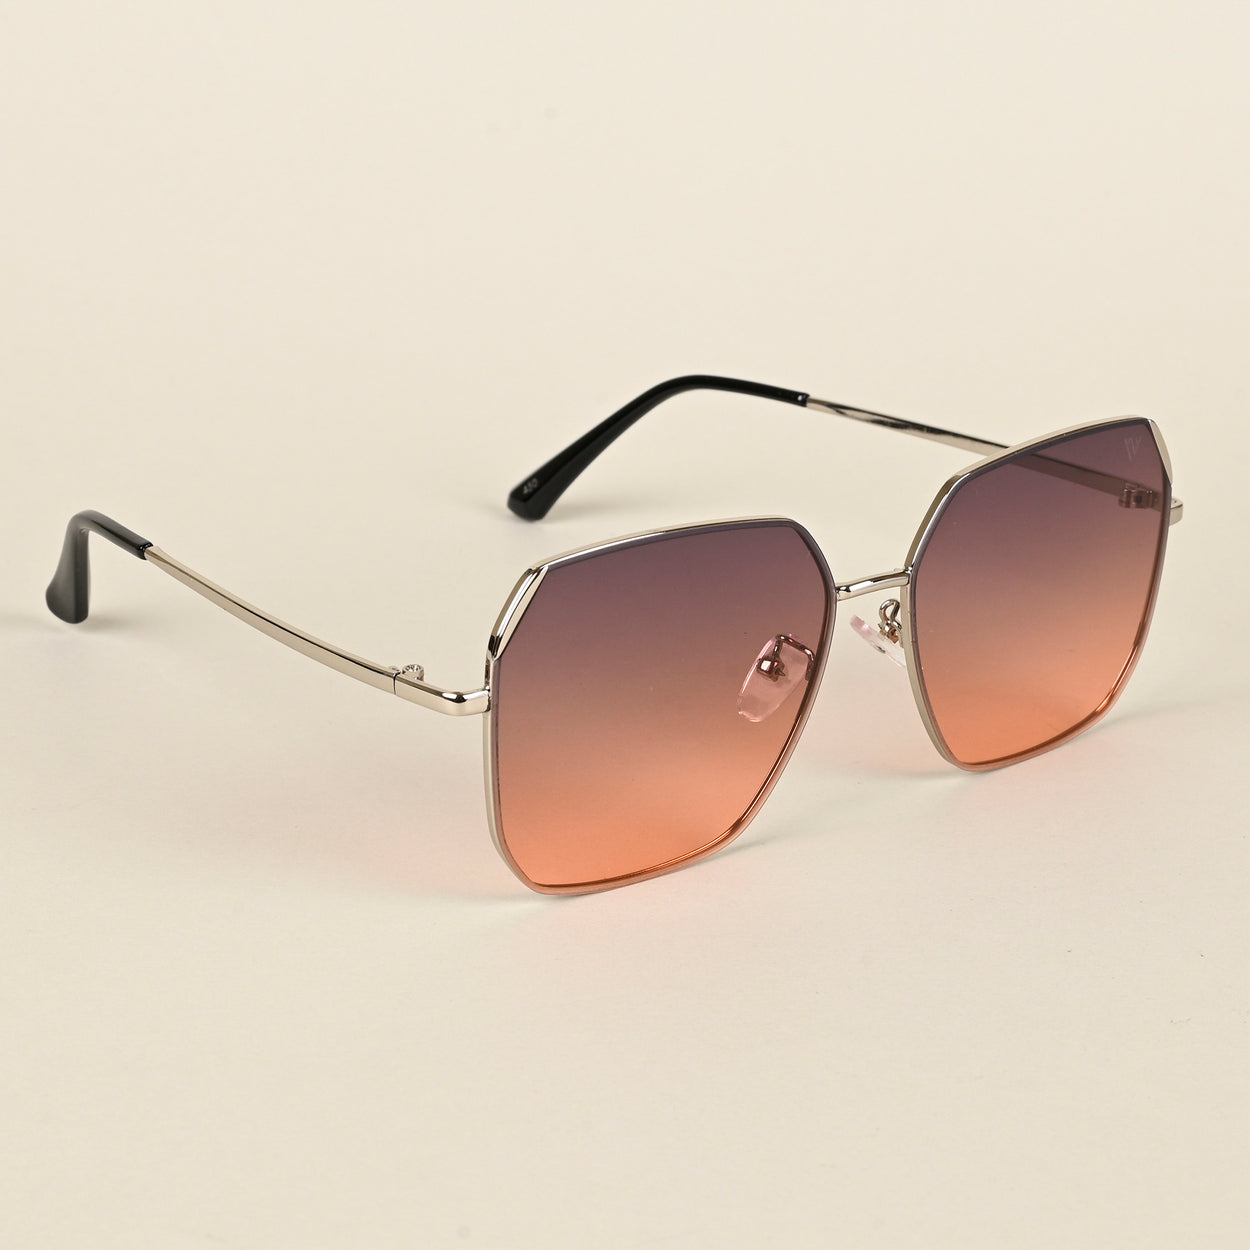 Voyage Grey & Orange Square Sunglasses for Men & Women - MG4340